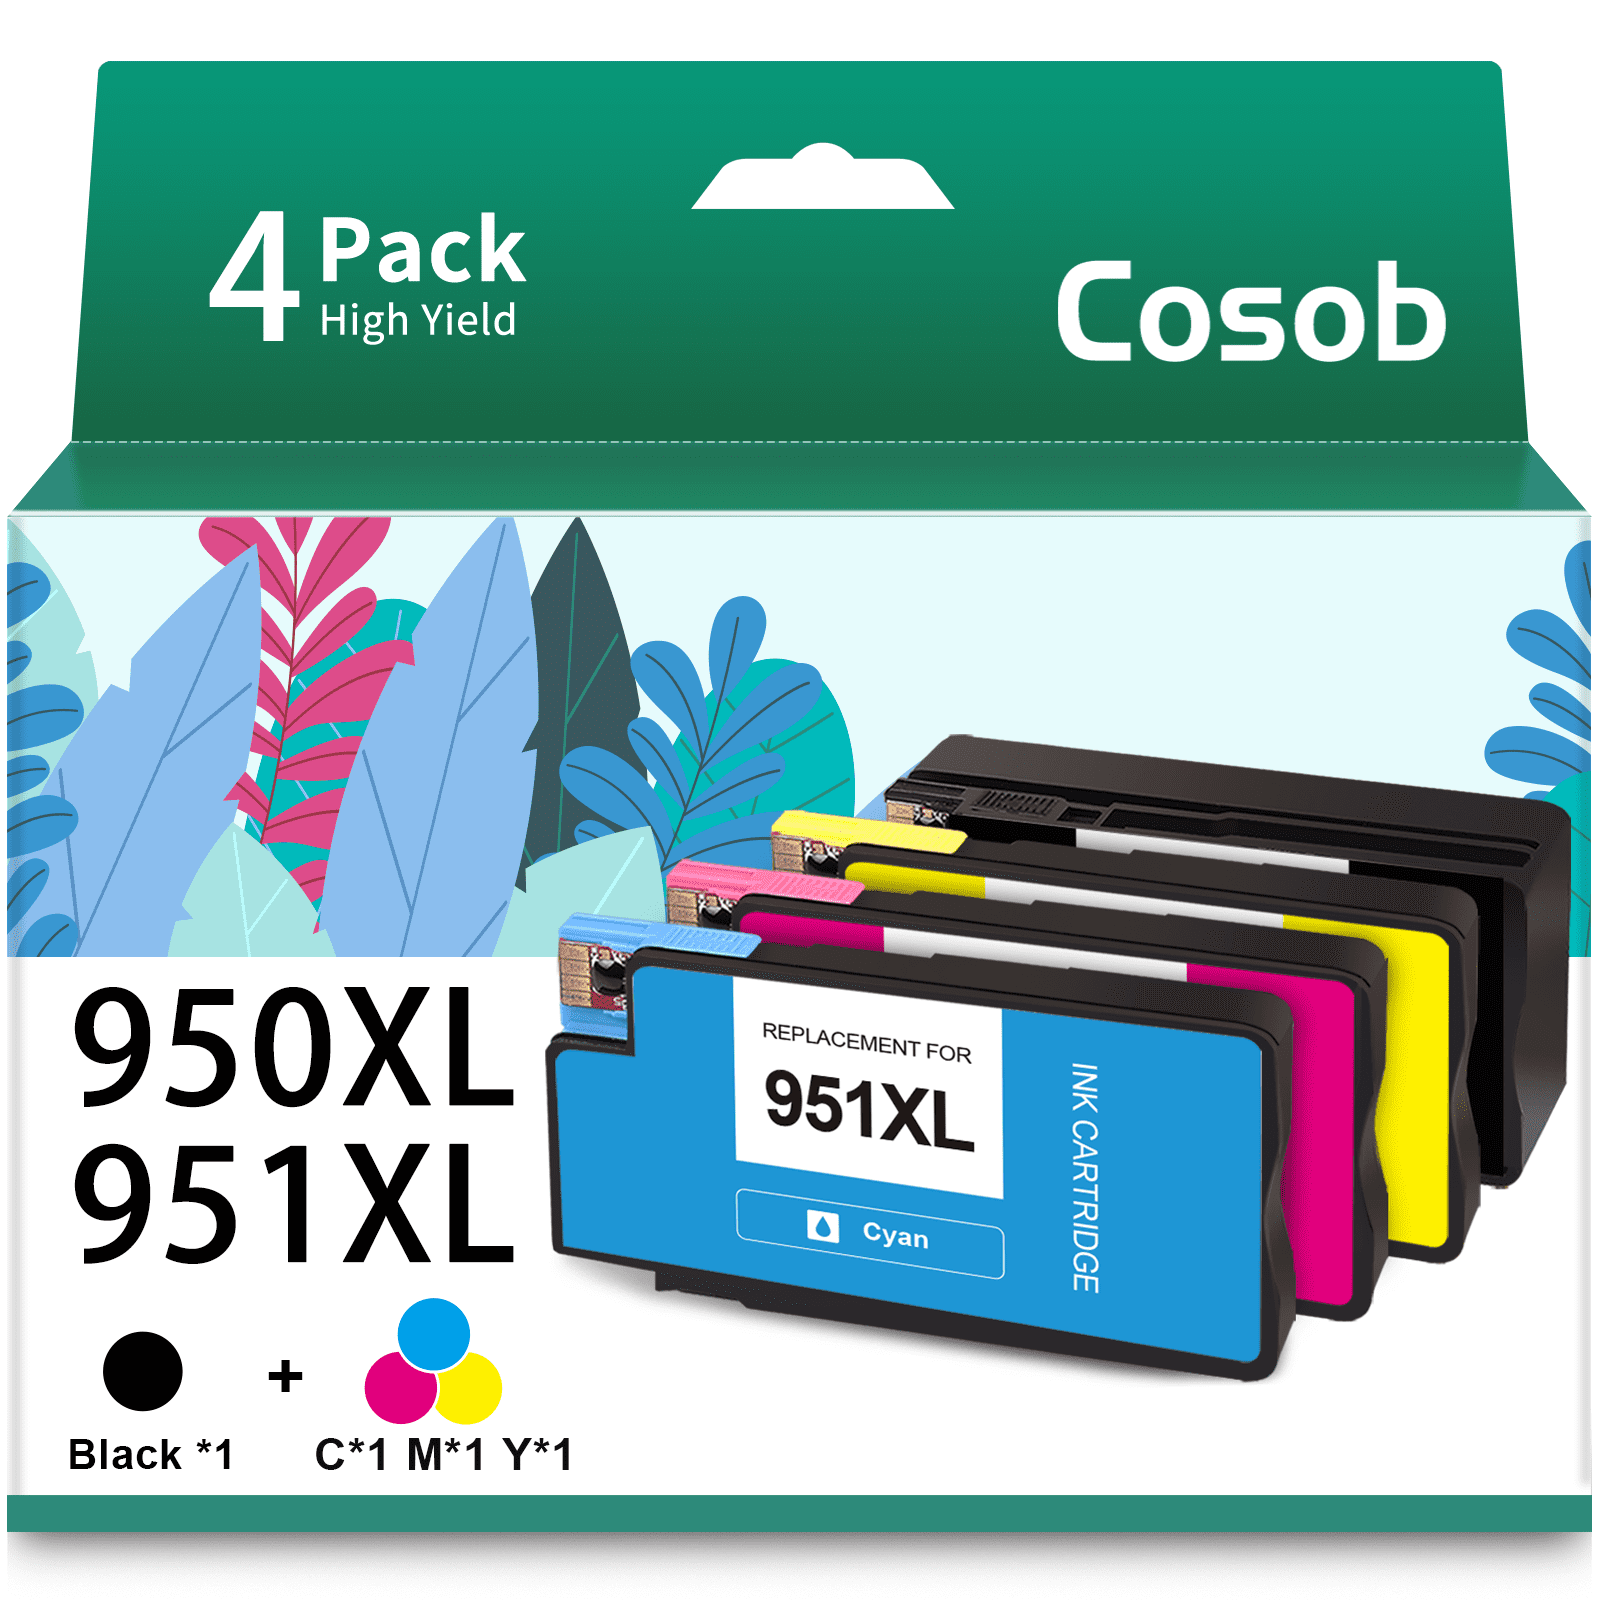 4PK 950XL 951XL Ink Cartridges for HP Officejet Pro 8100 8600 8610